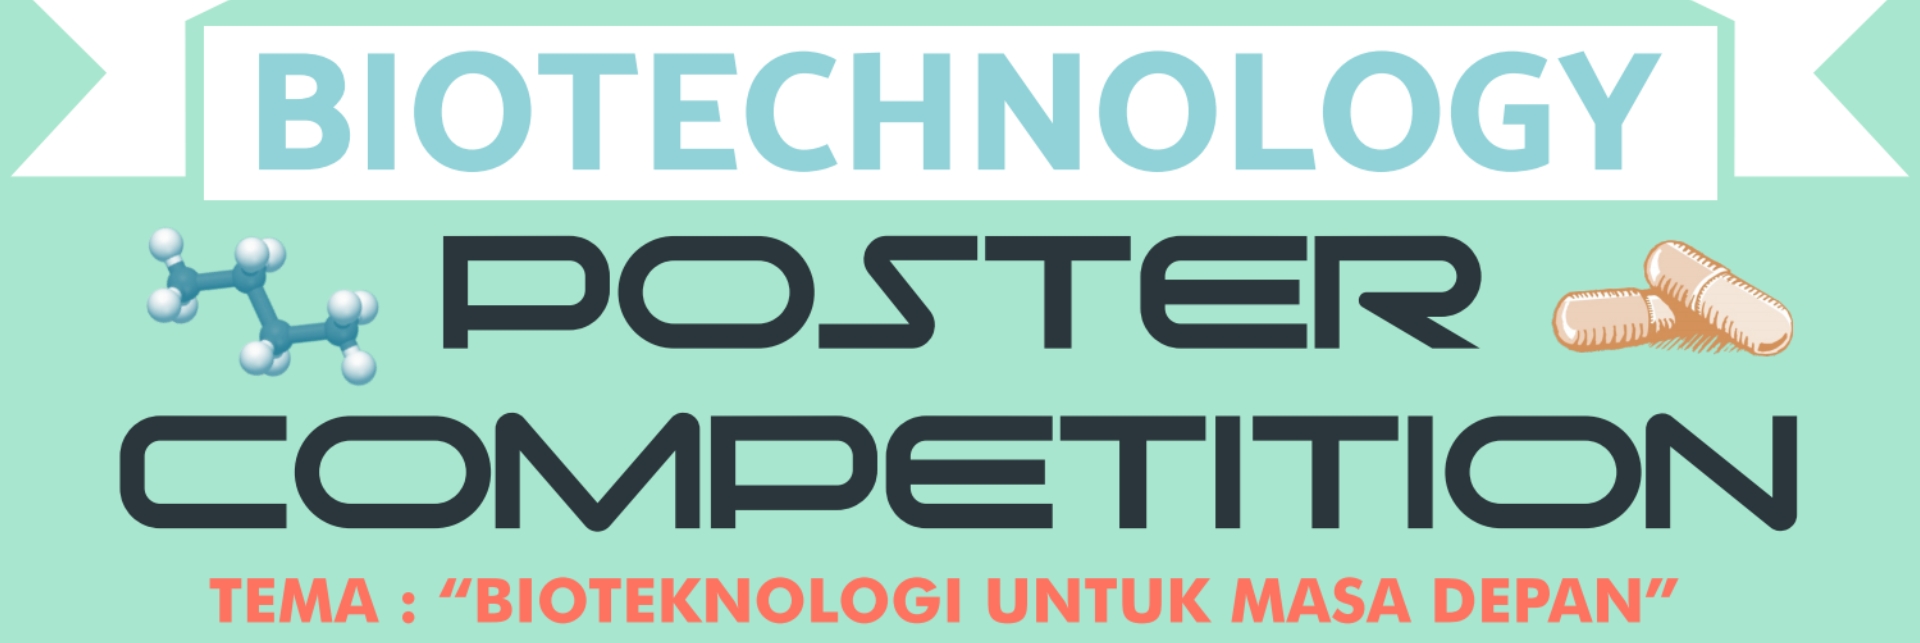 Pengumuman 10 Besar Biotechnology Poster Competition